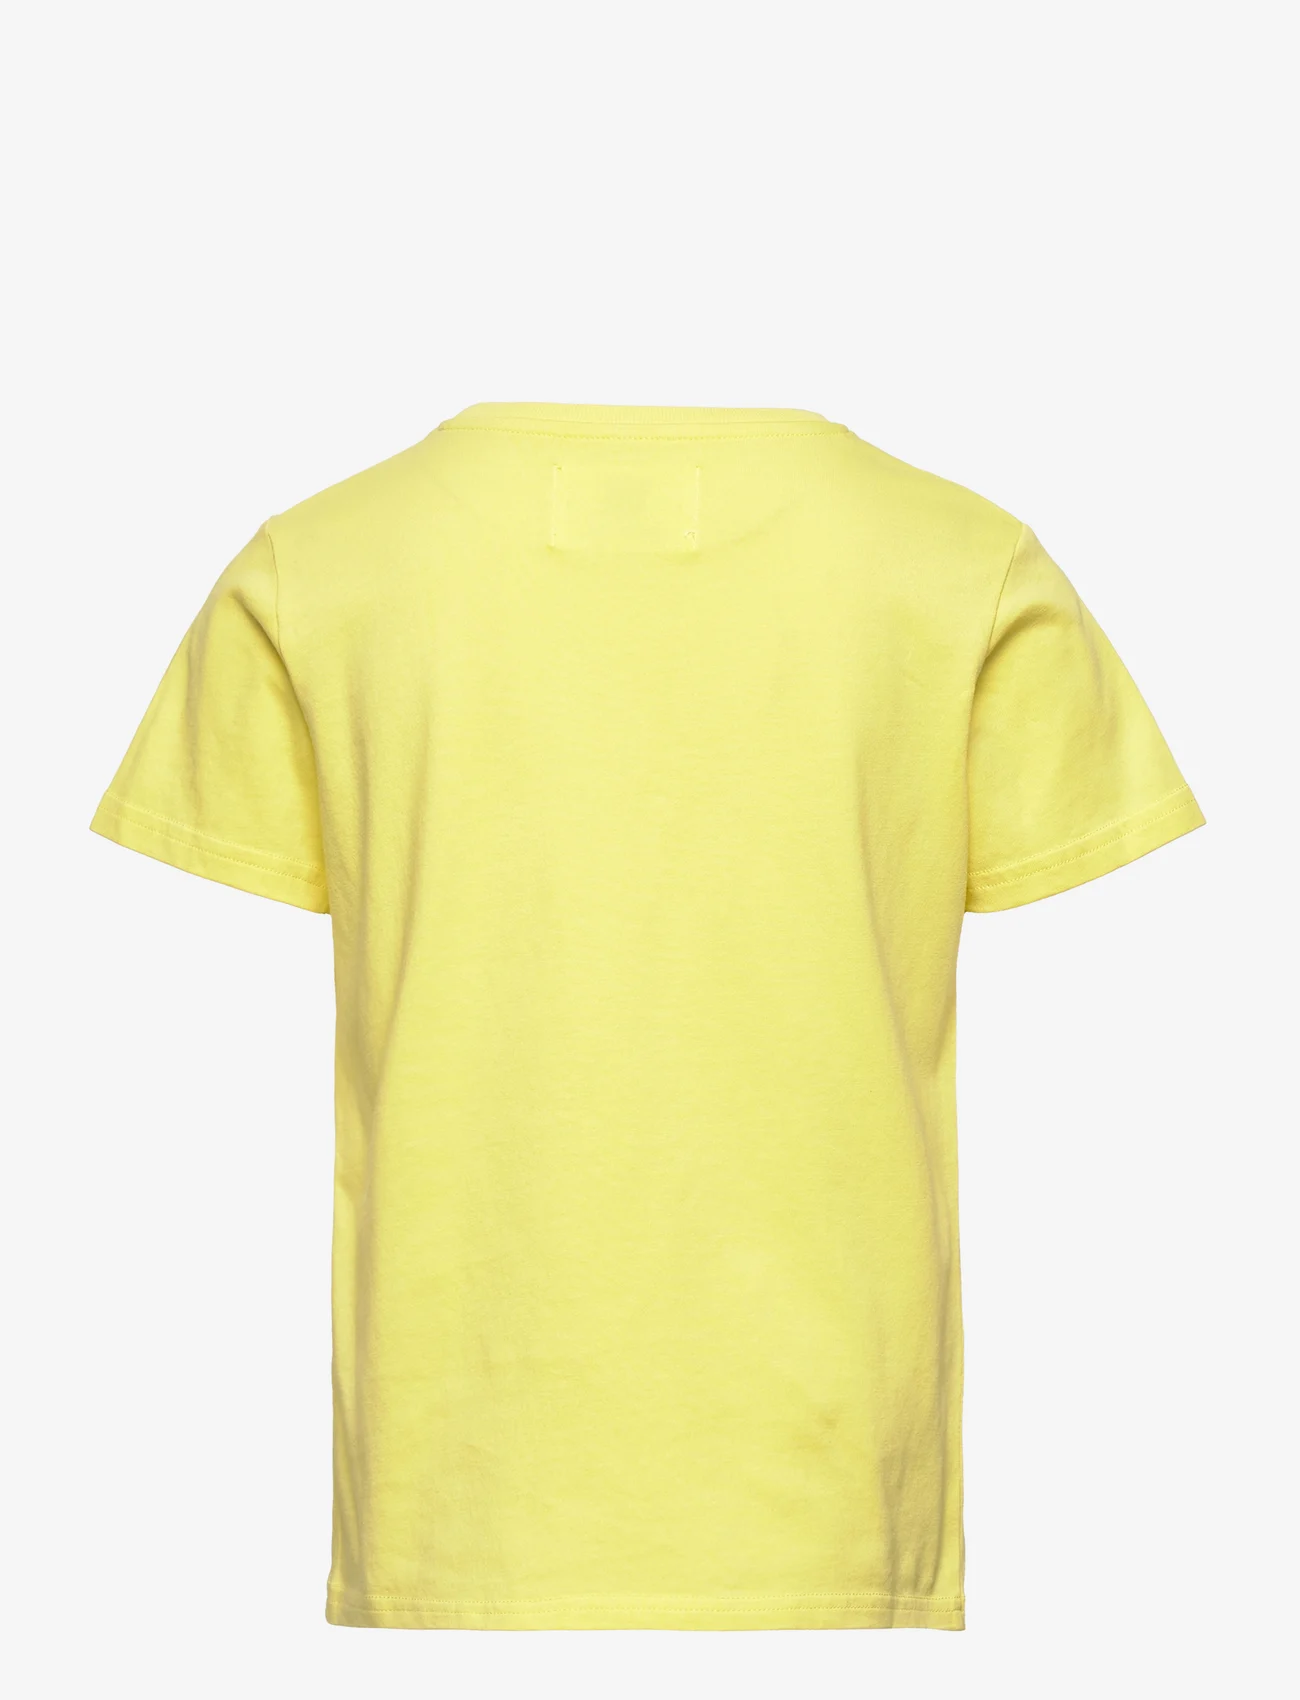 Wood Wood - Ola AA kids T-shirt - krótki rękaw - yellow - 1